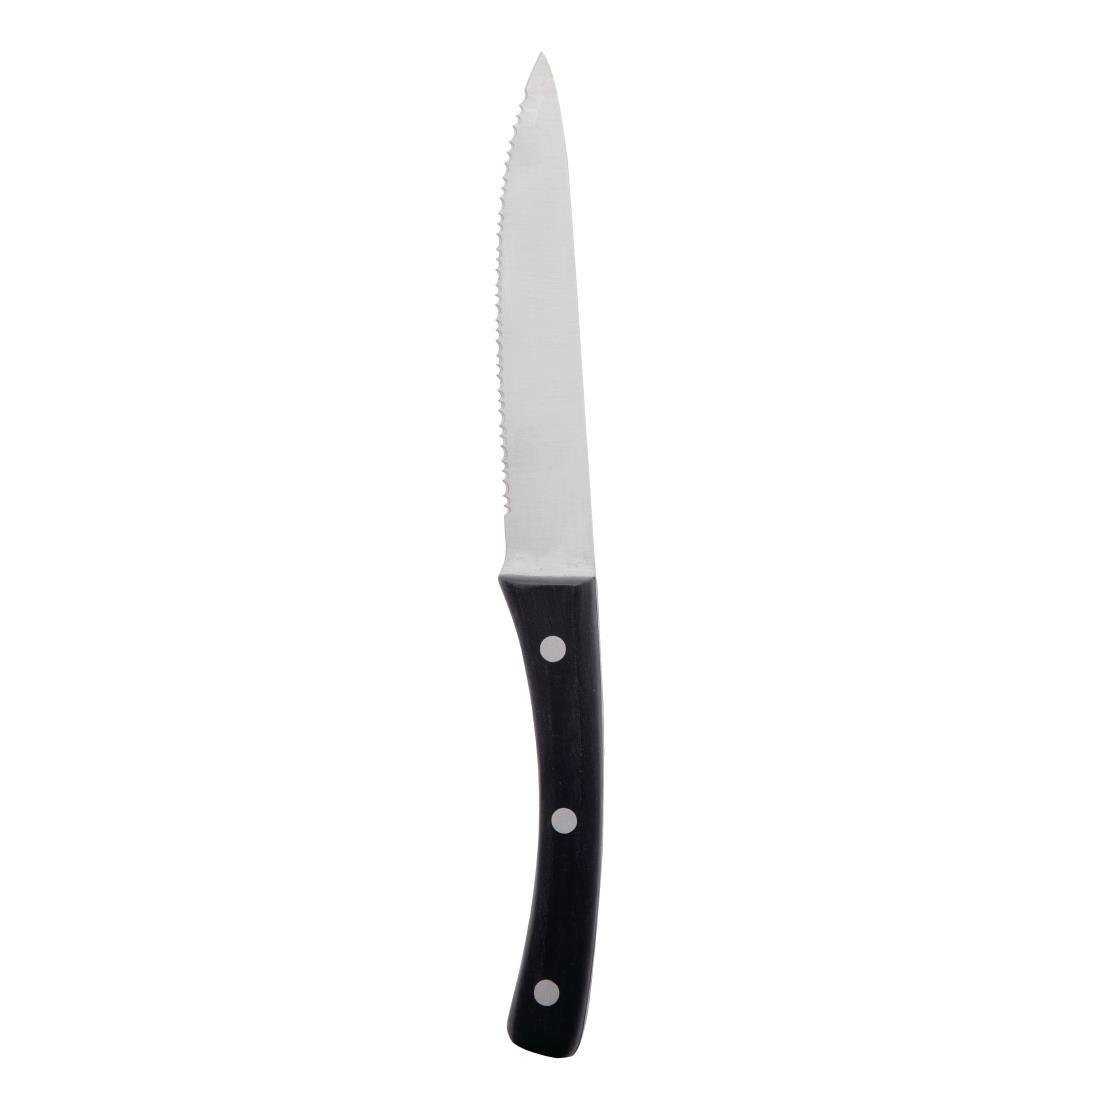 Abert Angus Steak Knives (Pack of 12) - GC651  - 2